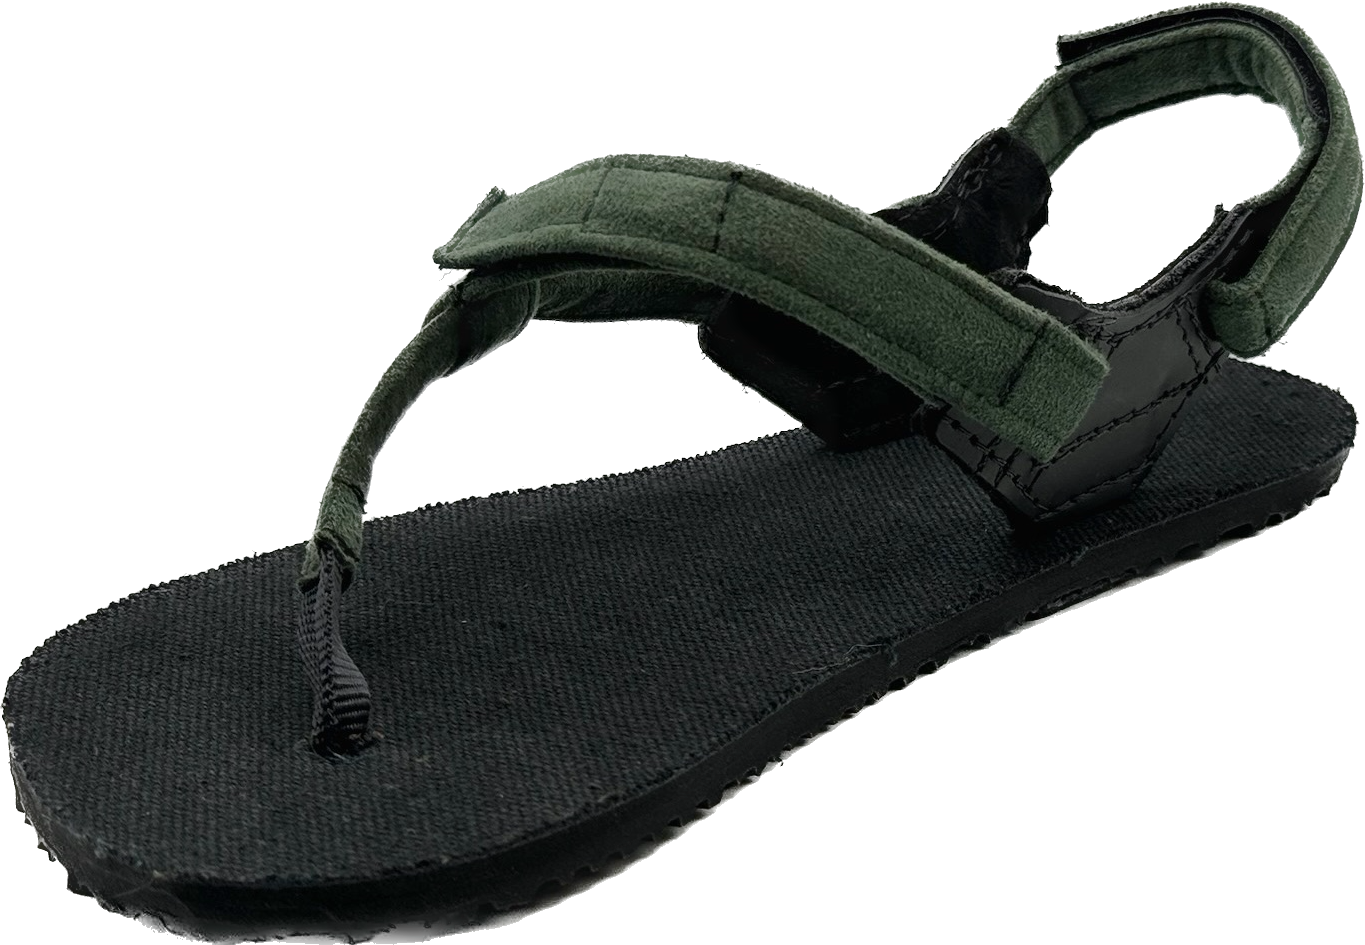 BlackBear Sandals 2.0 - Black Hemp Footbed - Green Straps